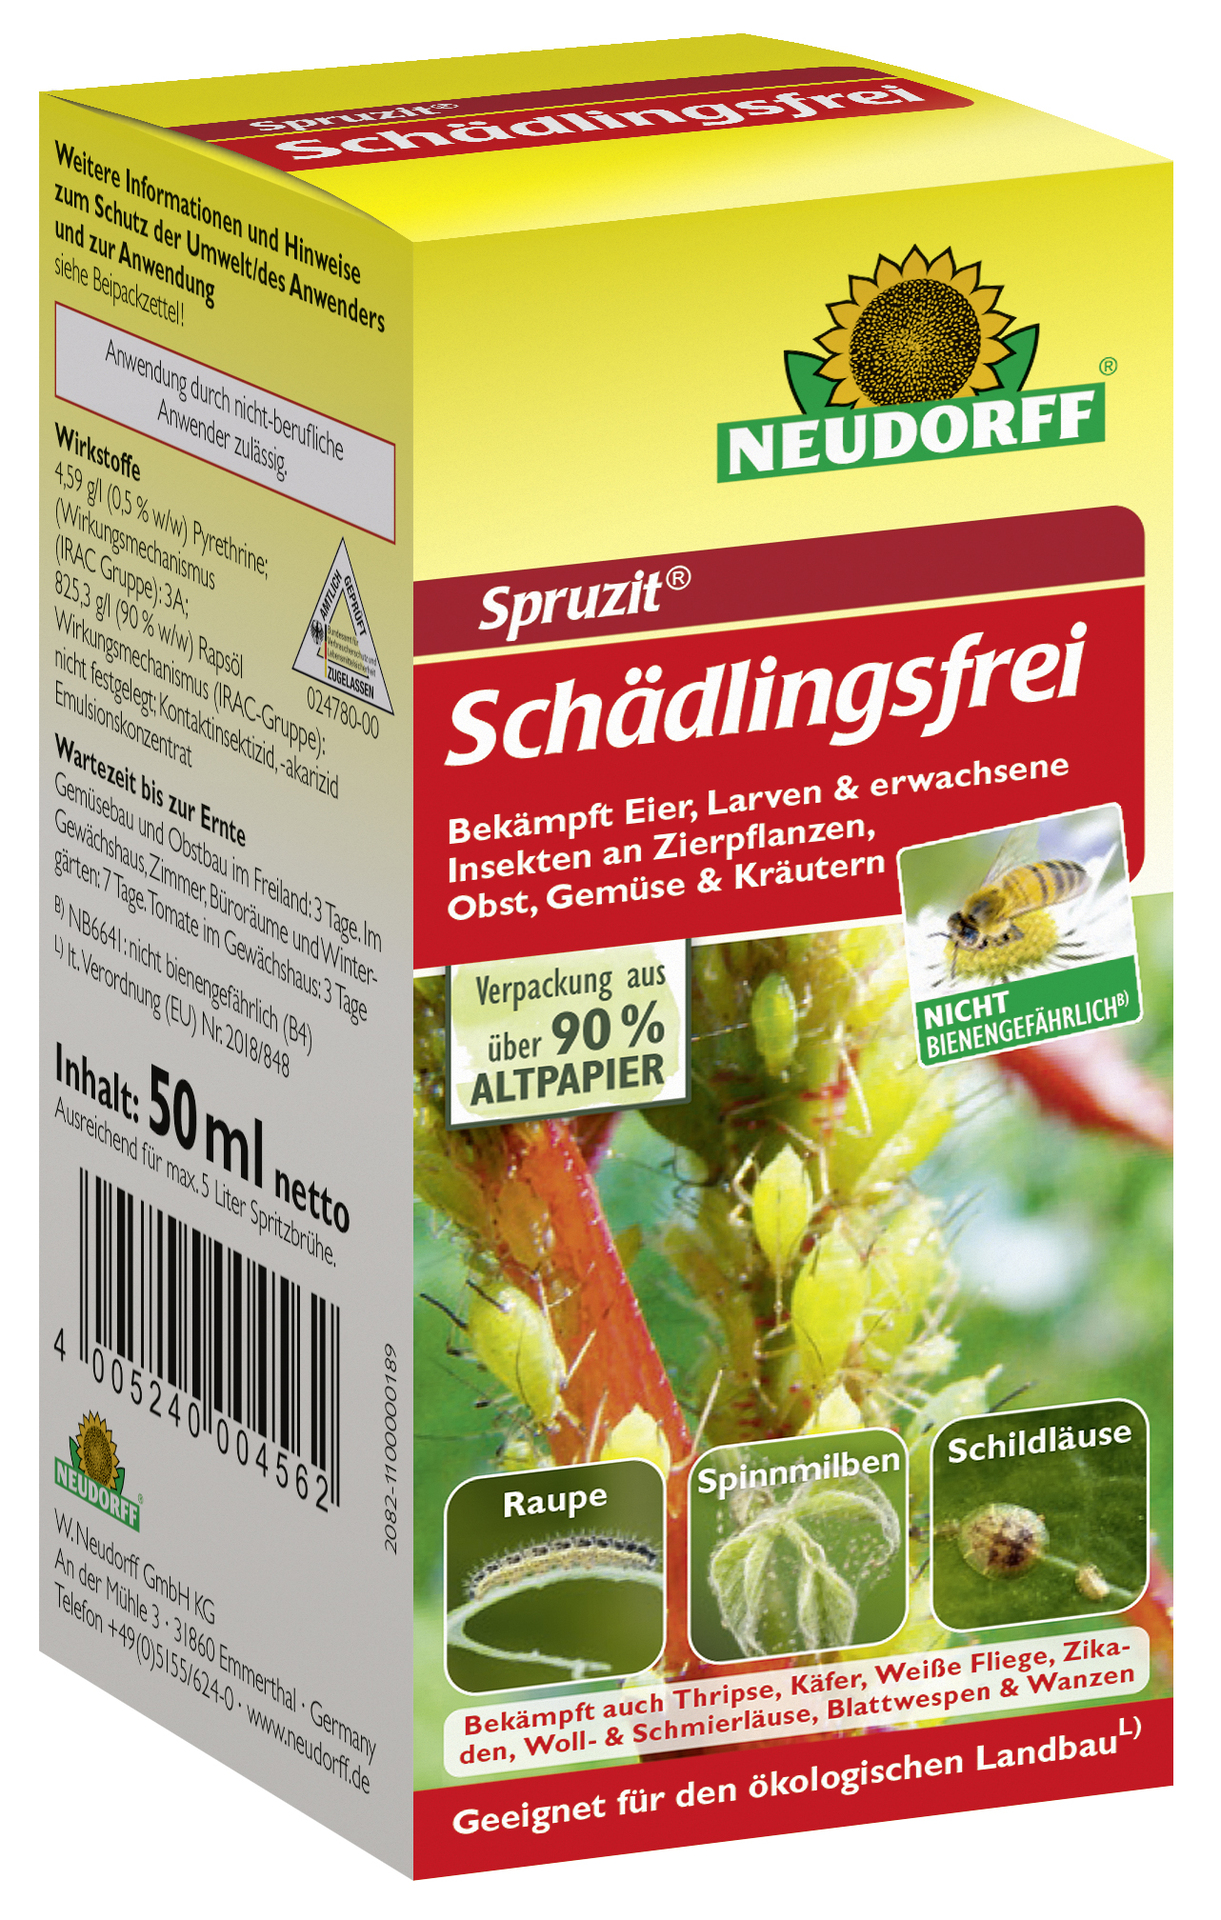 W. Neudorff GmbH KG Spruzit Schädlingsfrei